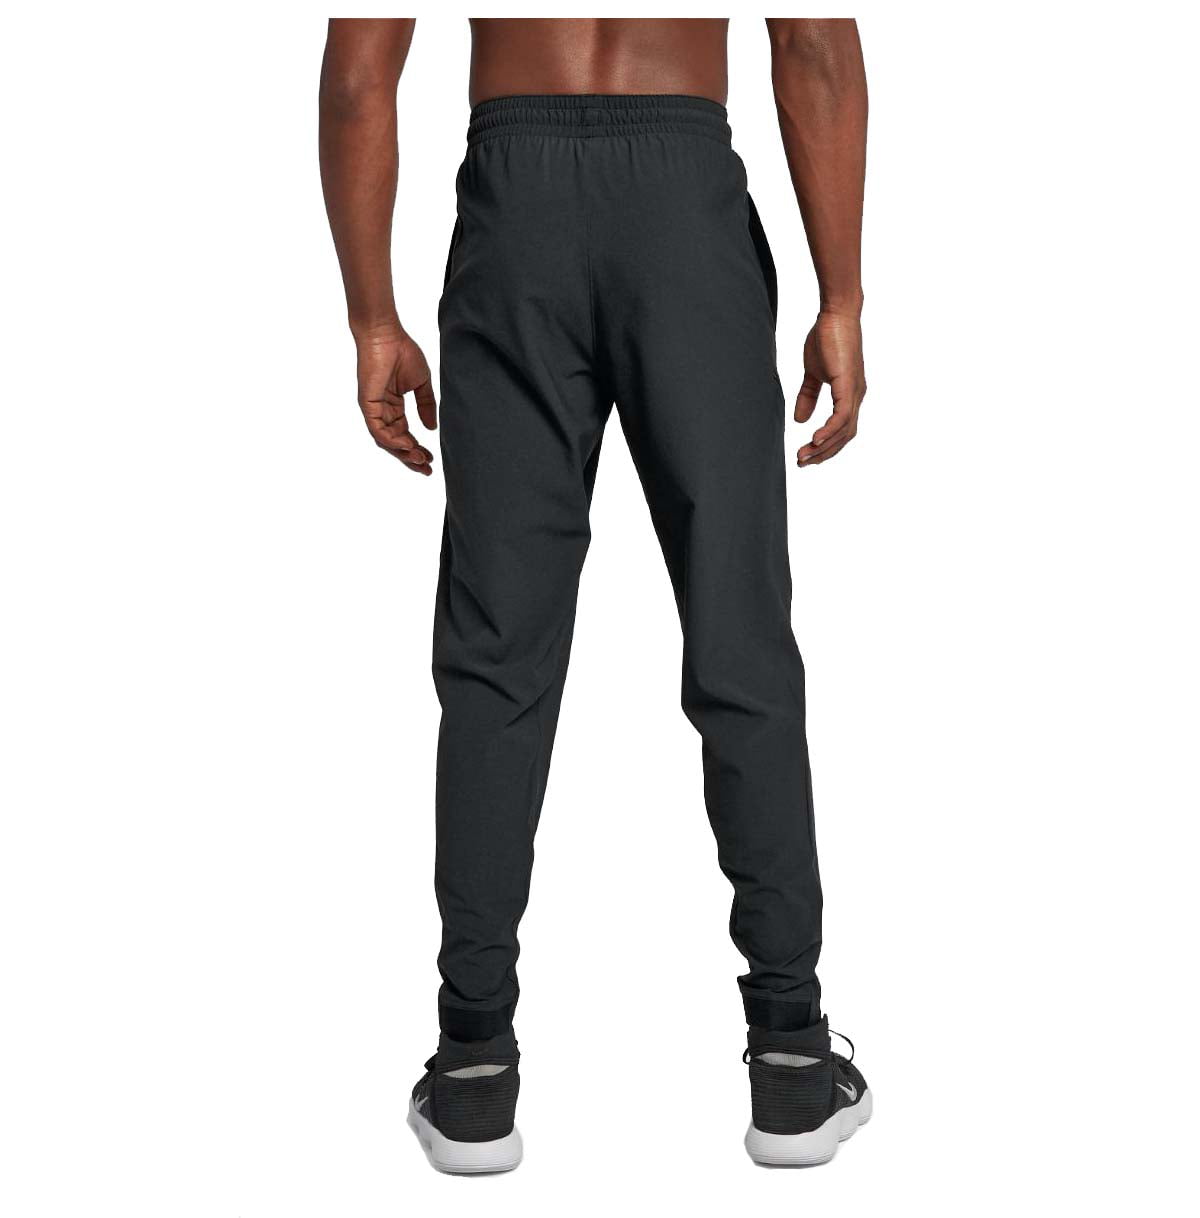 Nike Men's Flex Woven Basketball Pants 